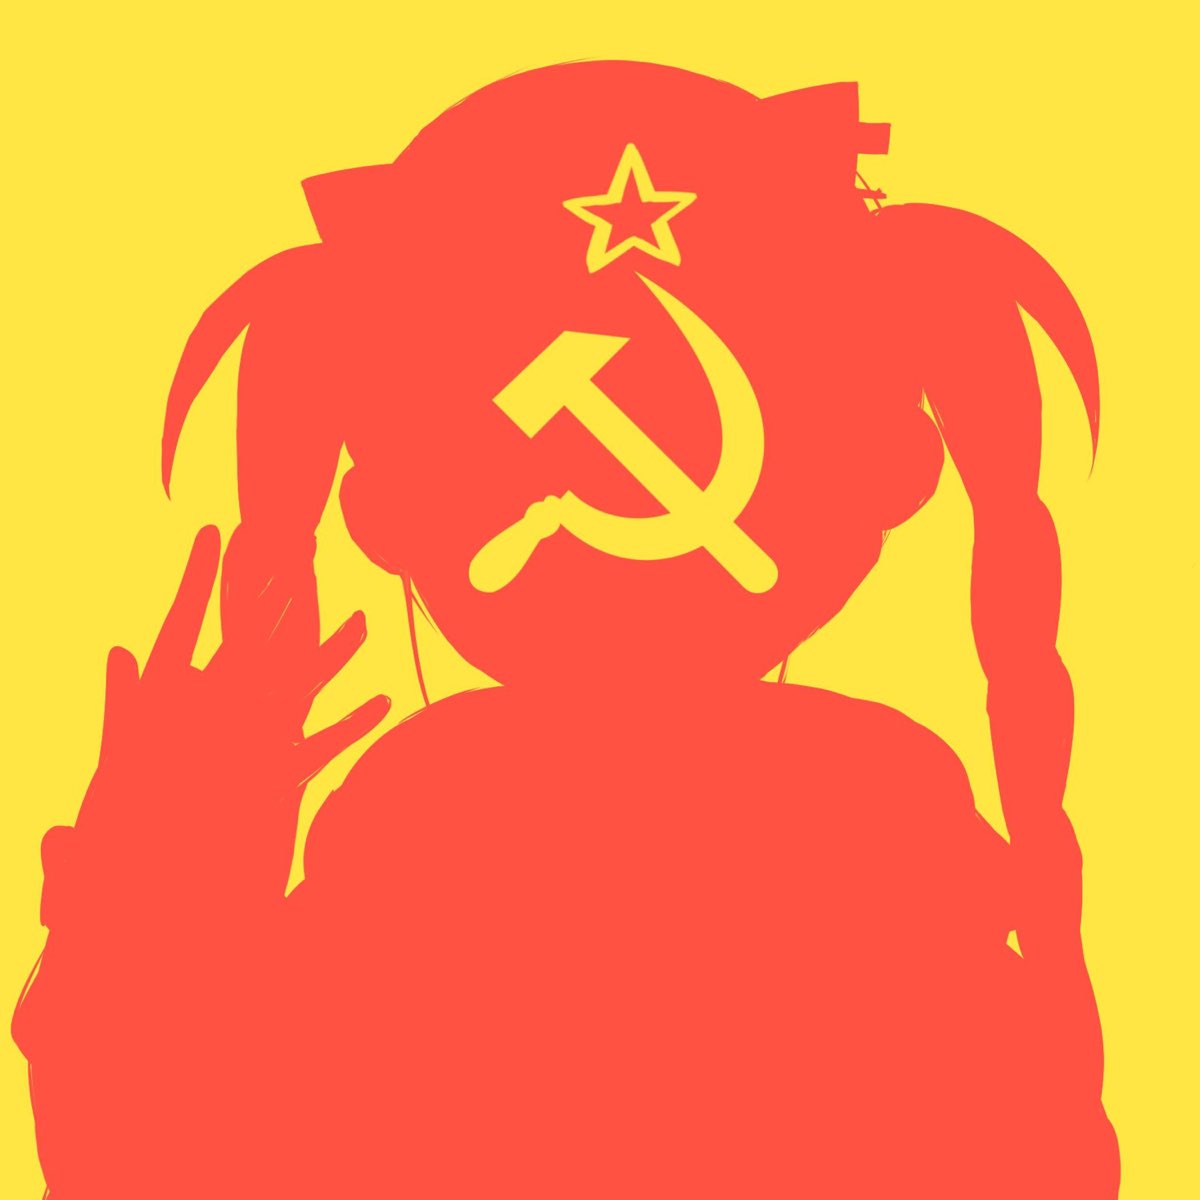 Soviet Loli Anthem - Single by Kyoresu on Apple Music